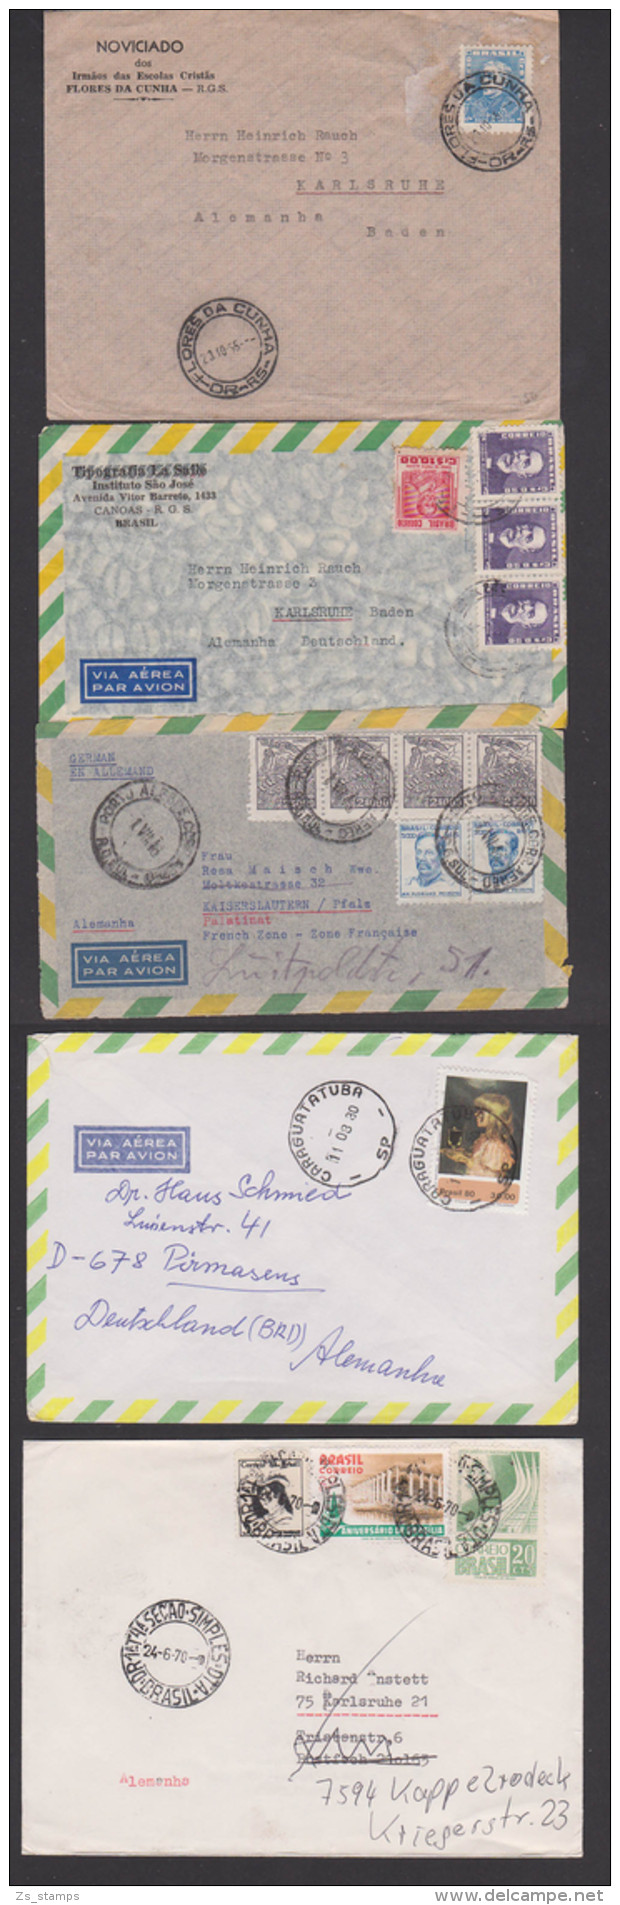 Brasilien Brasil Canoas Flores Da Cunha Diamantina  Erzbischof 5 Covers, Letters  To Germany  Alemania - Cartas & Documentos